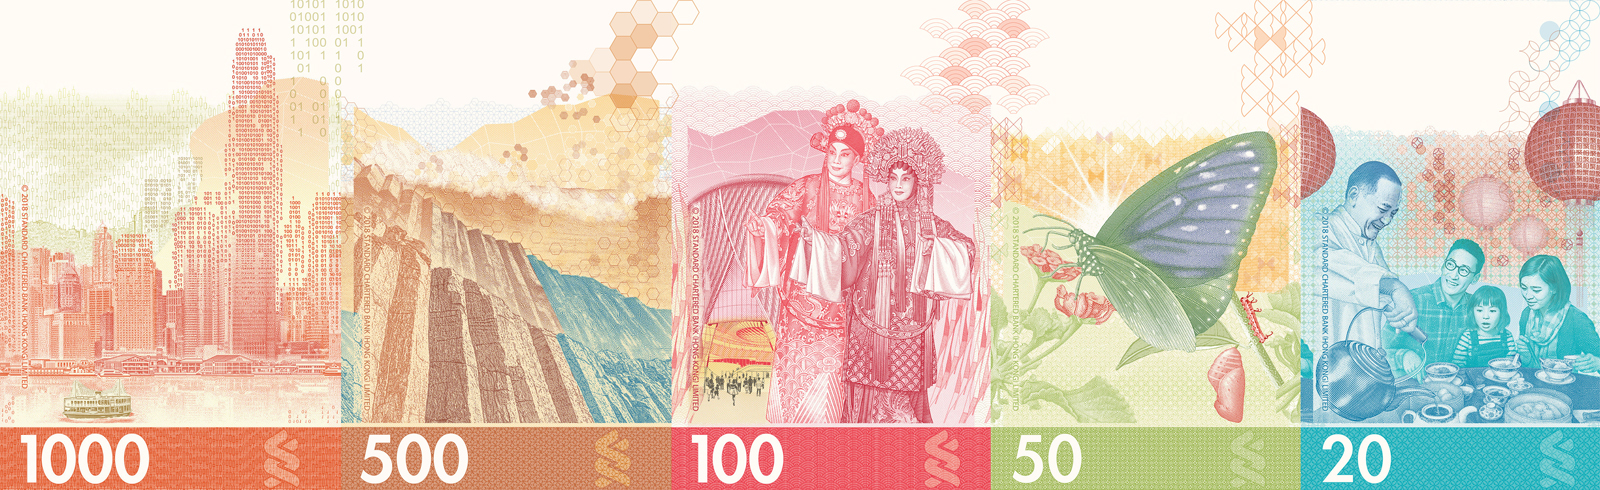 Hk banknotes series lion rock 